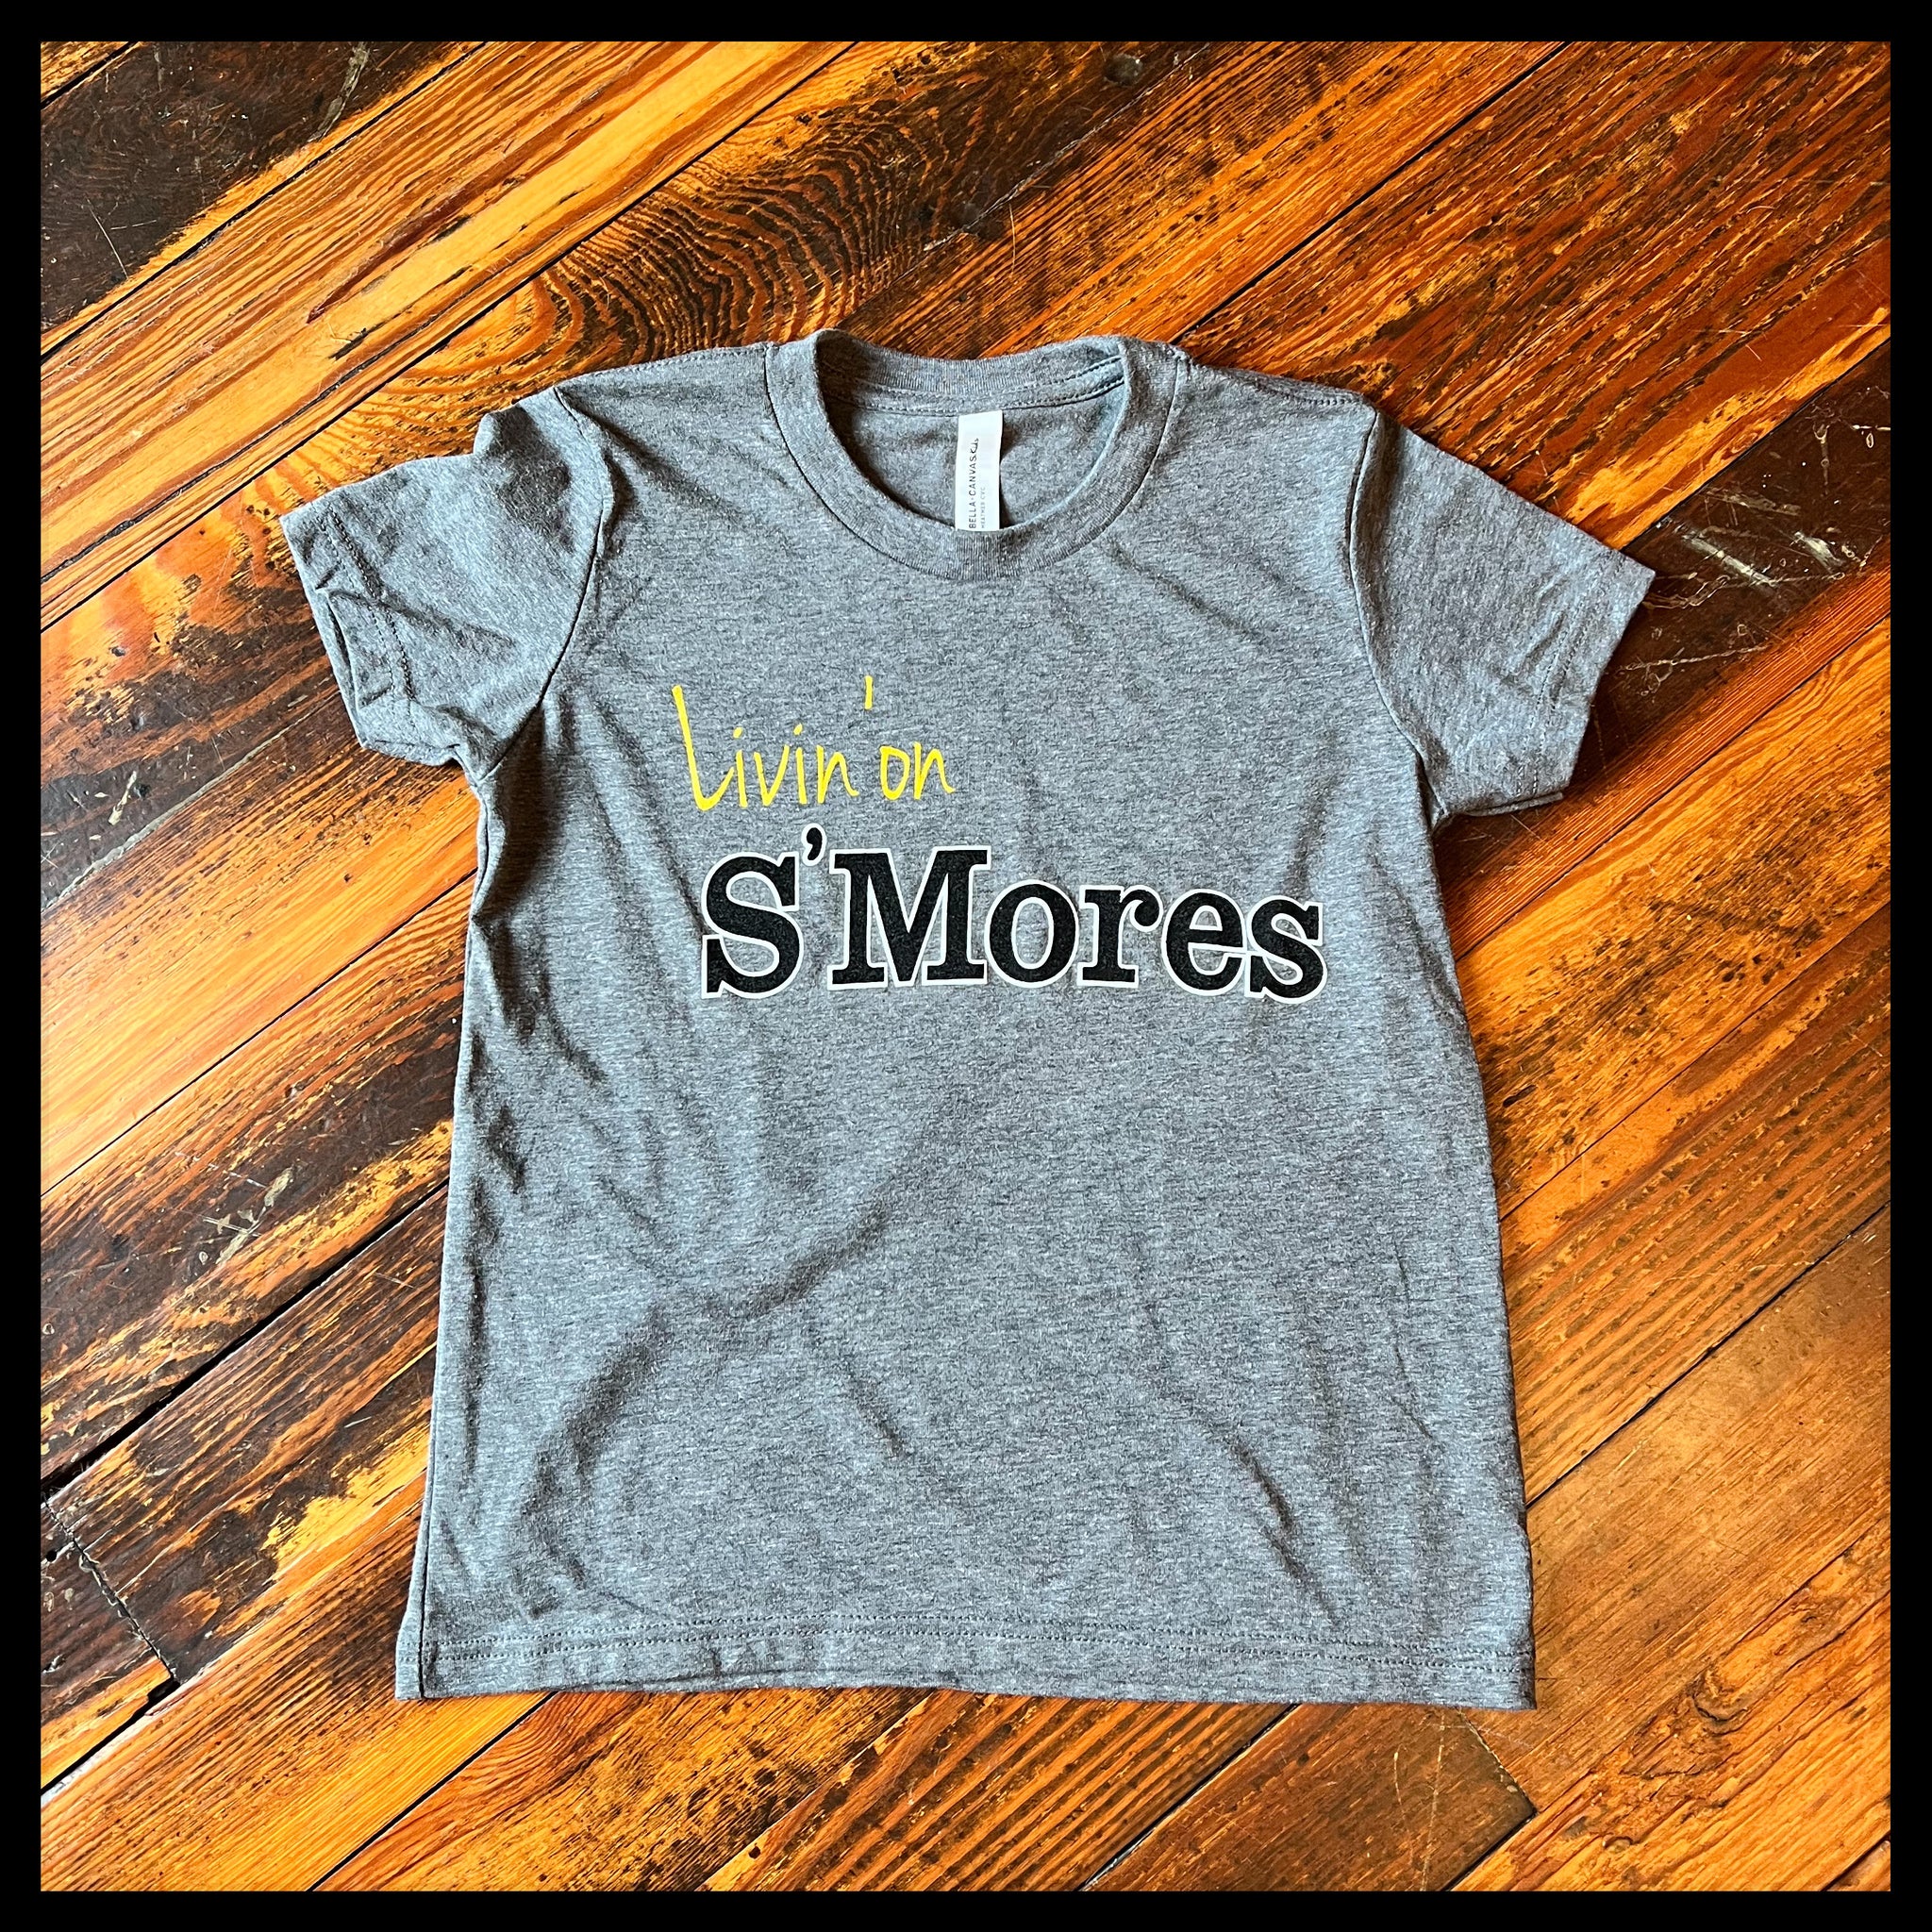 Kid Livin' on Smores T-shirt